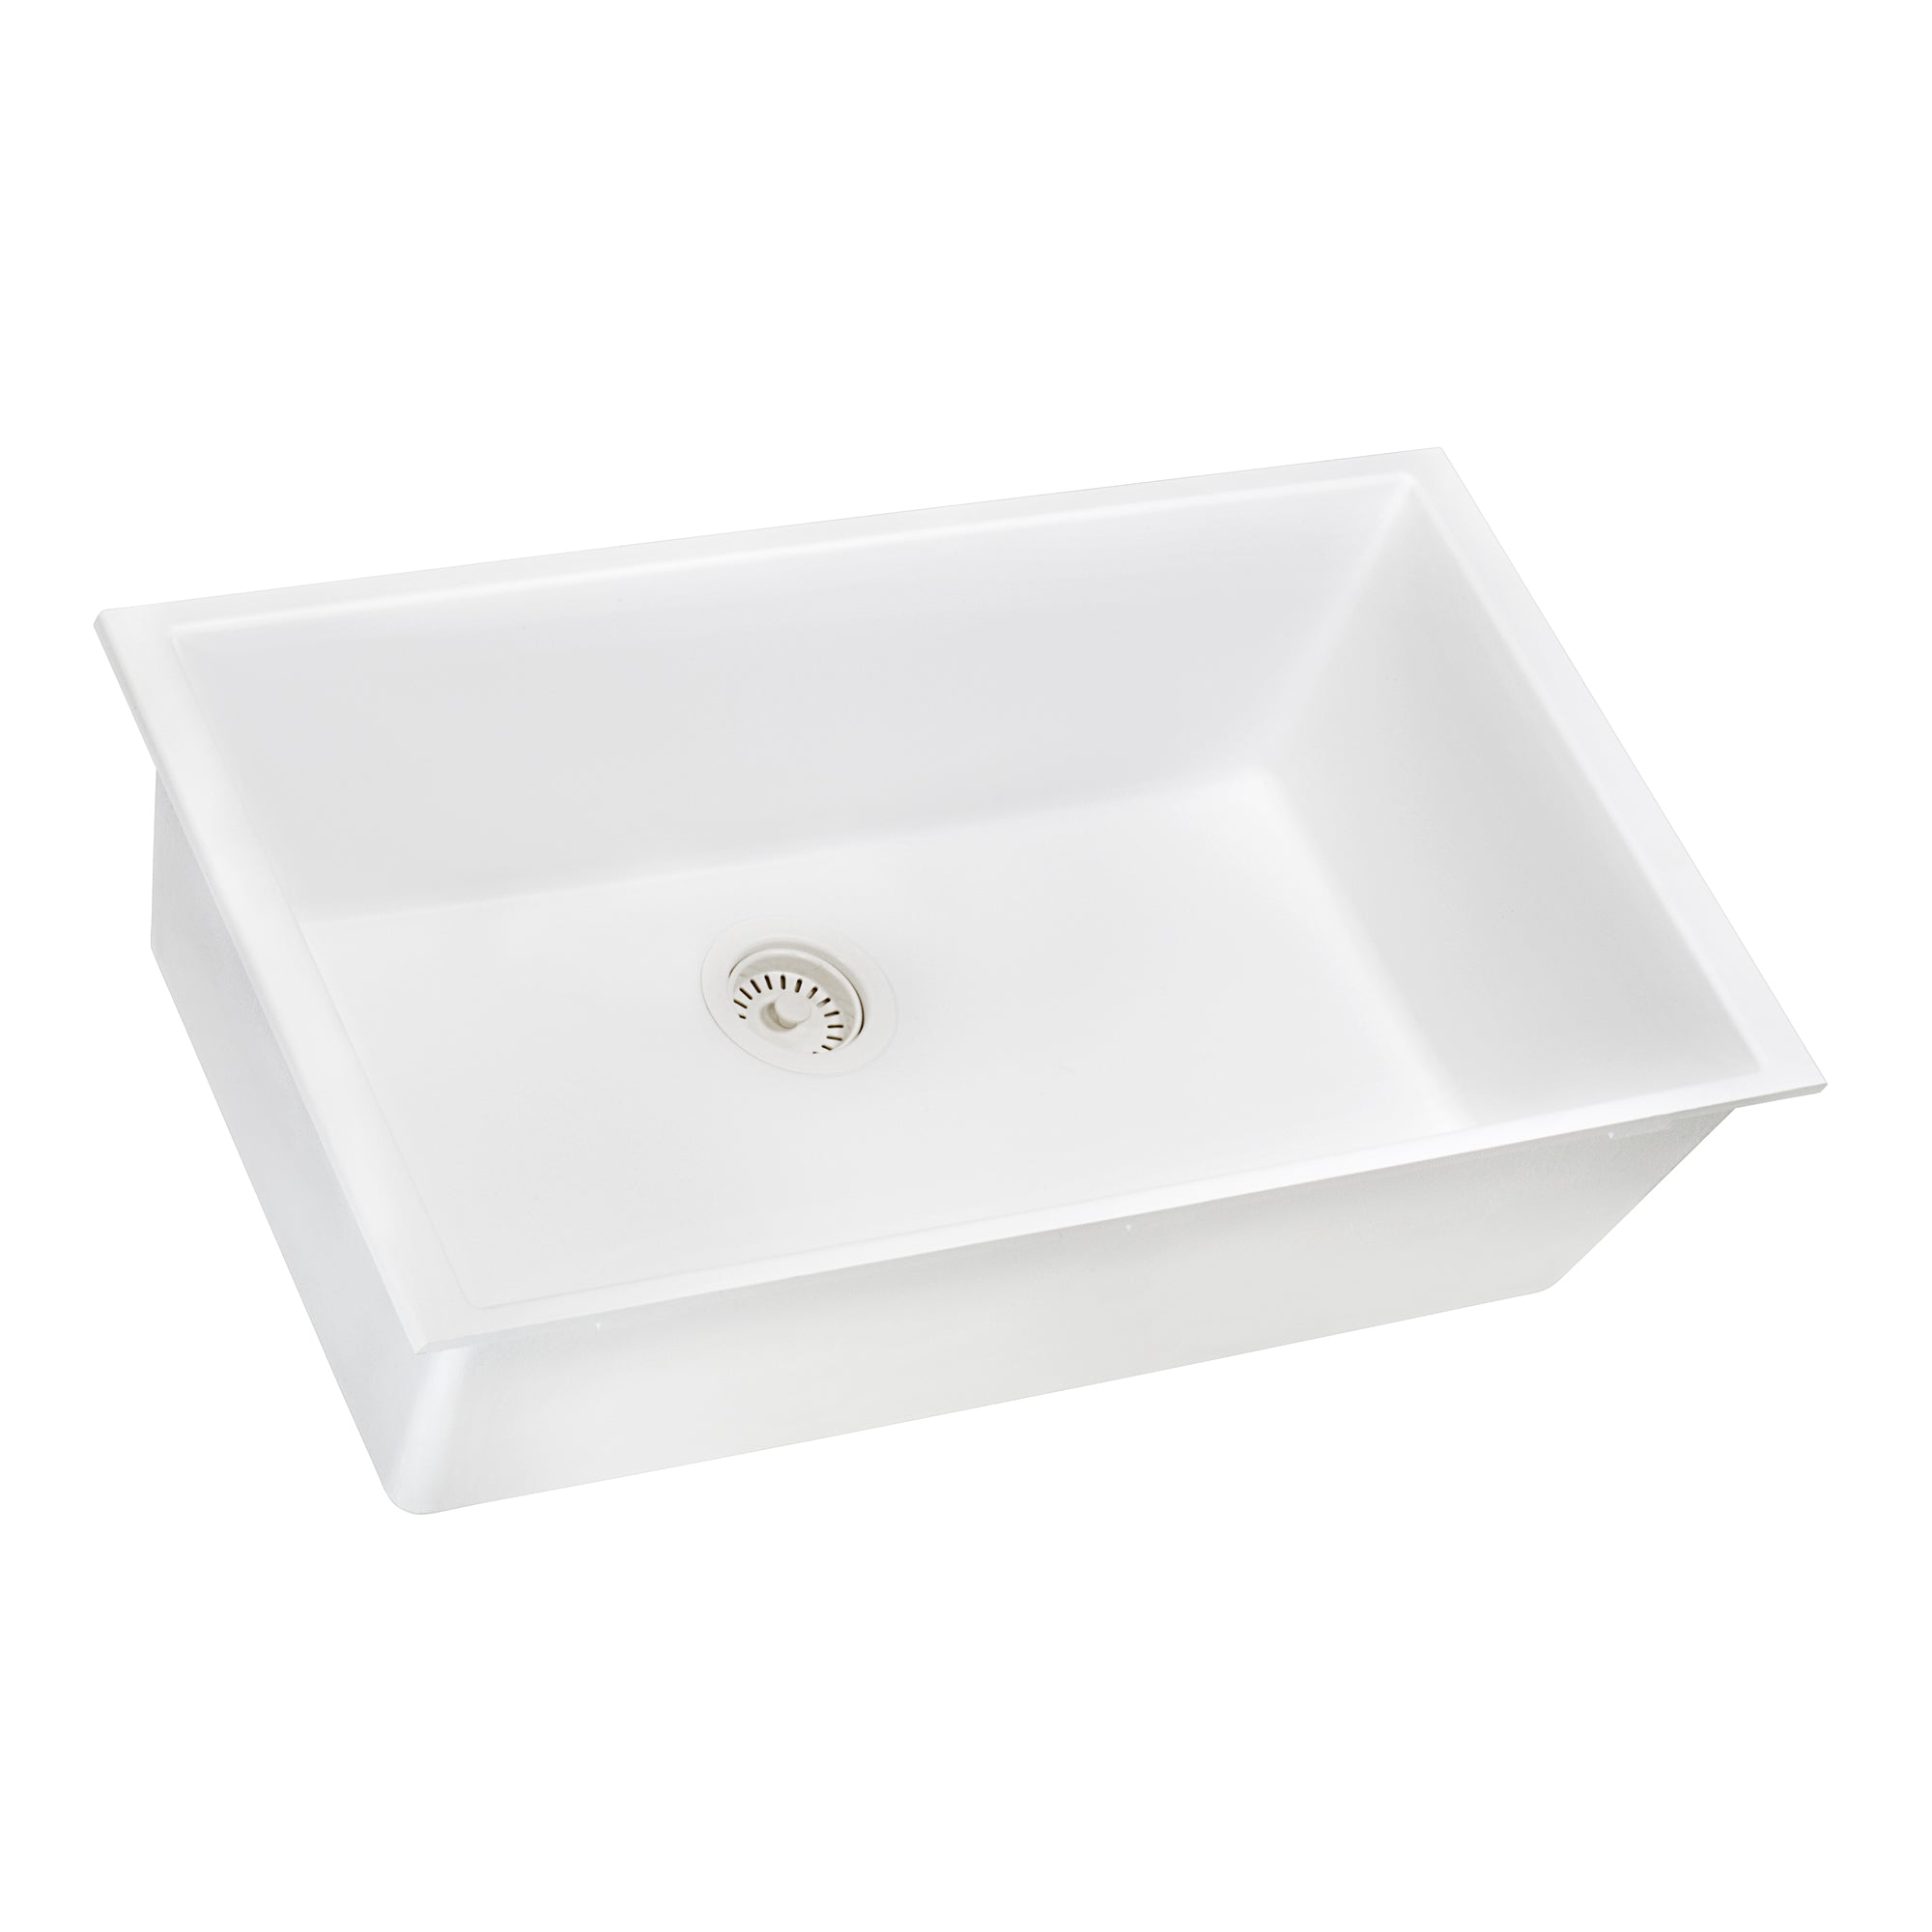 Ruvati 27" Composite Undermount Single Bowl Kitchen Sink in Arctic White